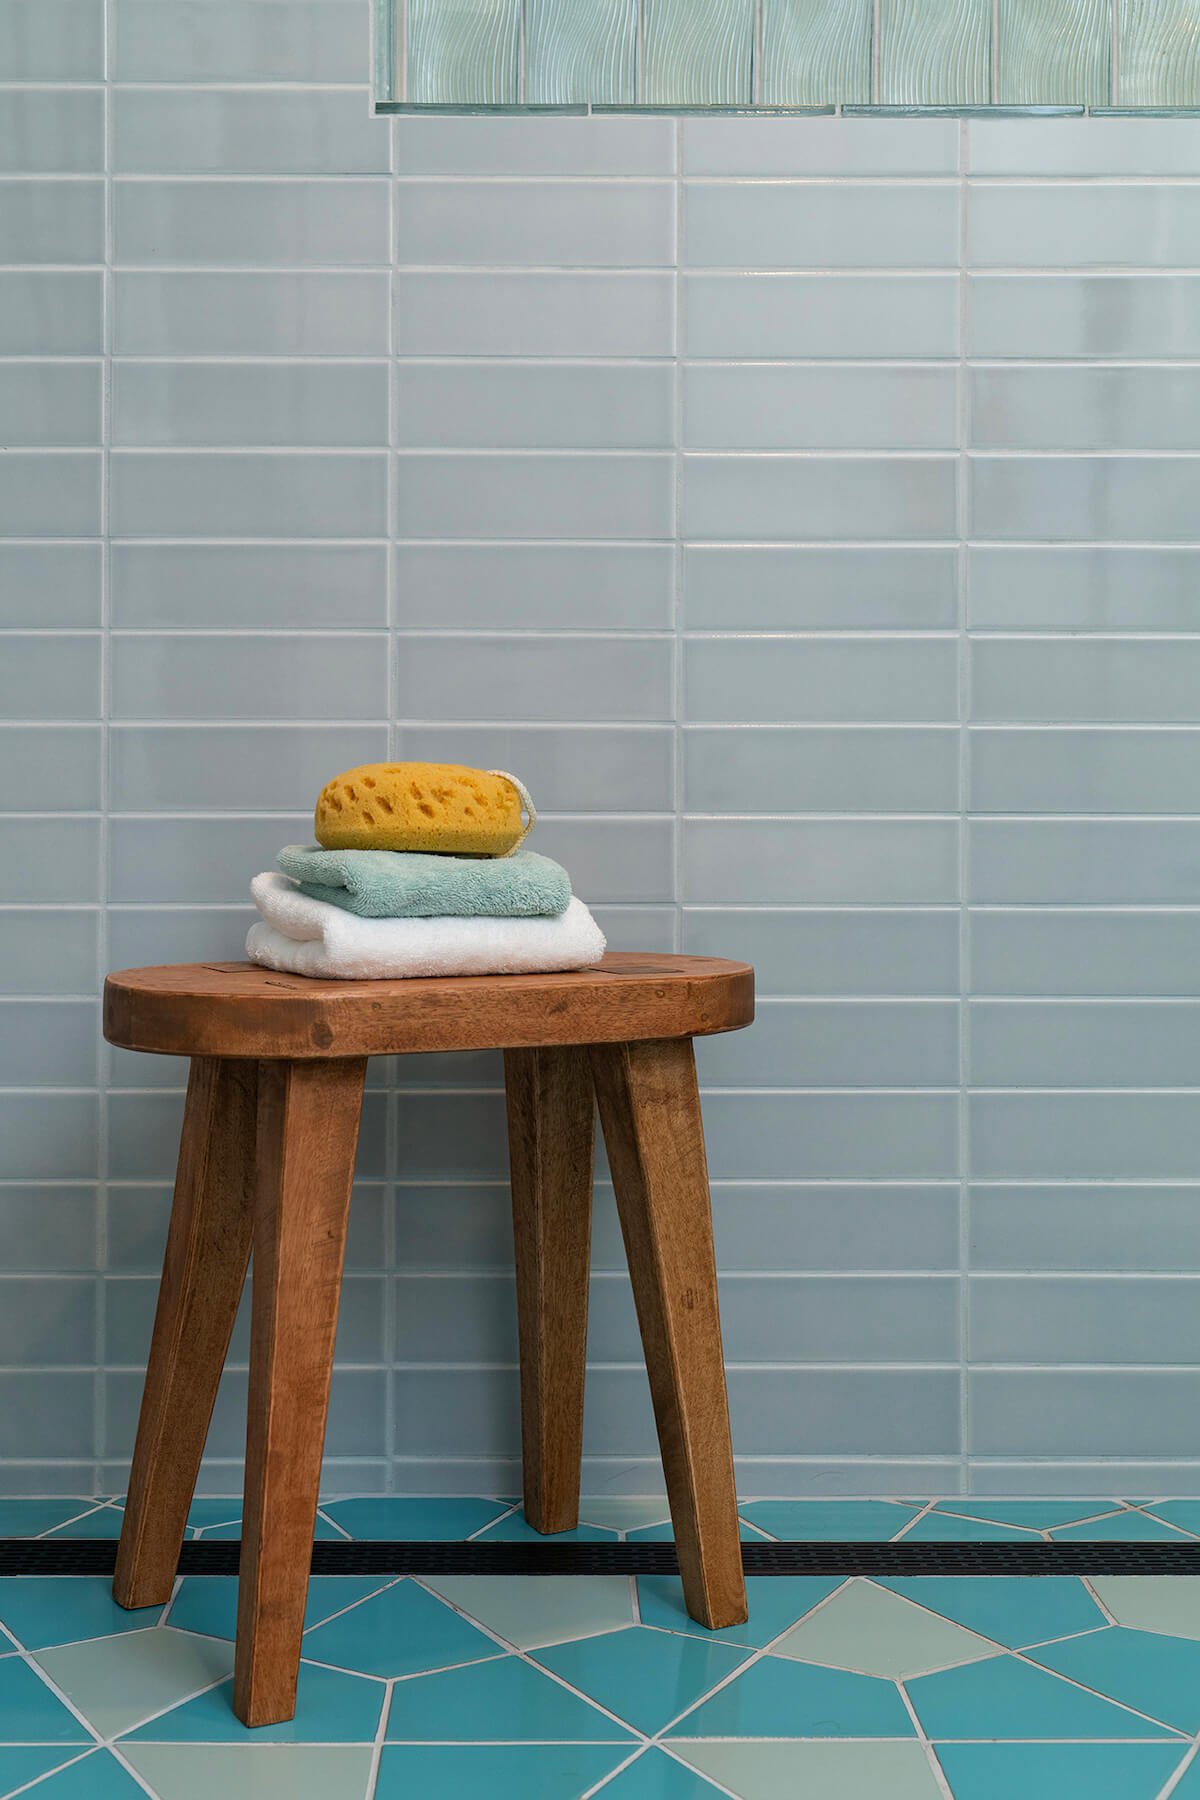 Gilman Berkeley Bathroom Remodel - Shower Features.jpg